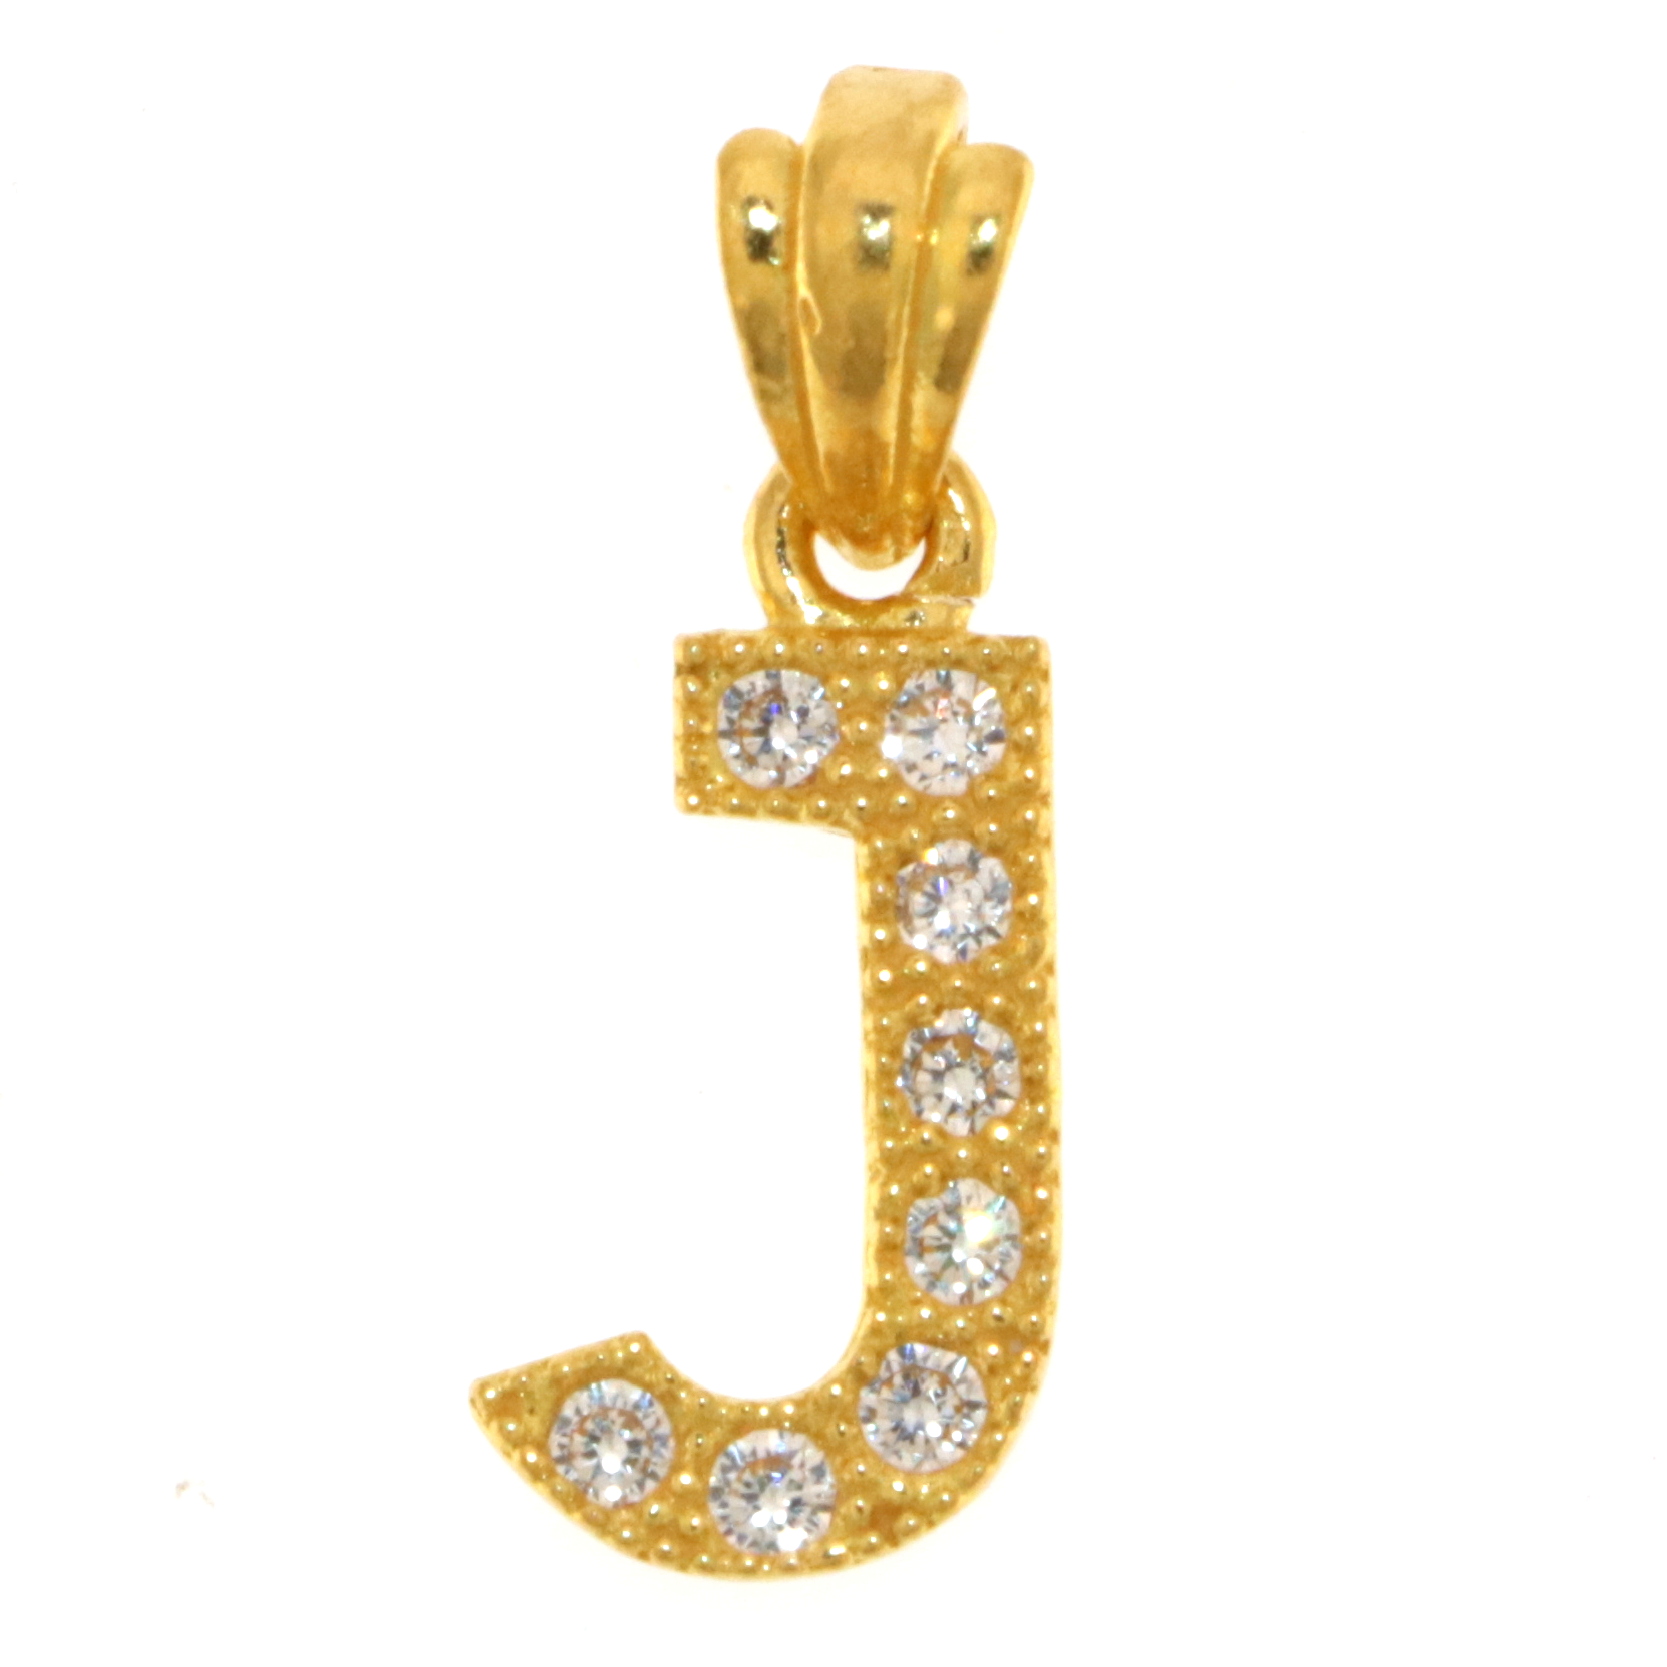 22carat Gold 'J' Pendant